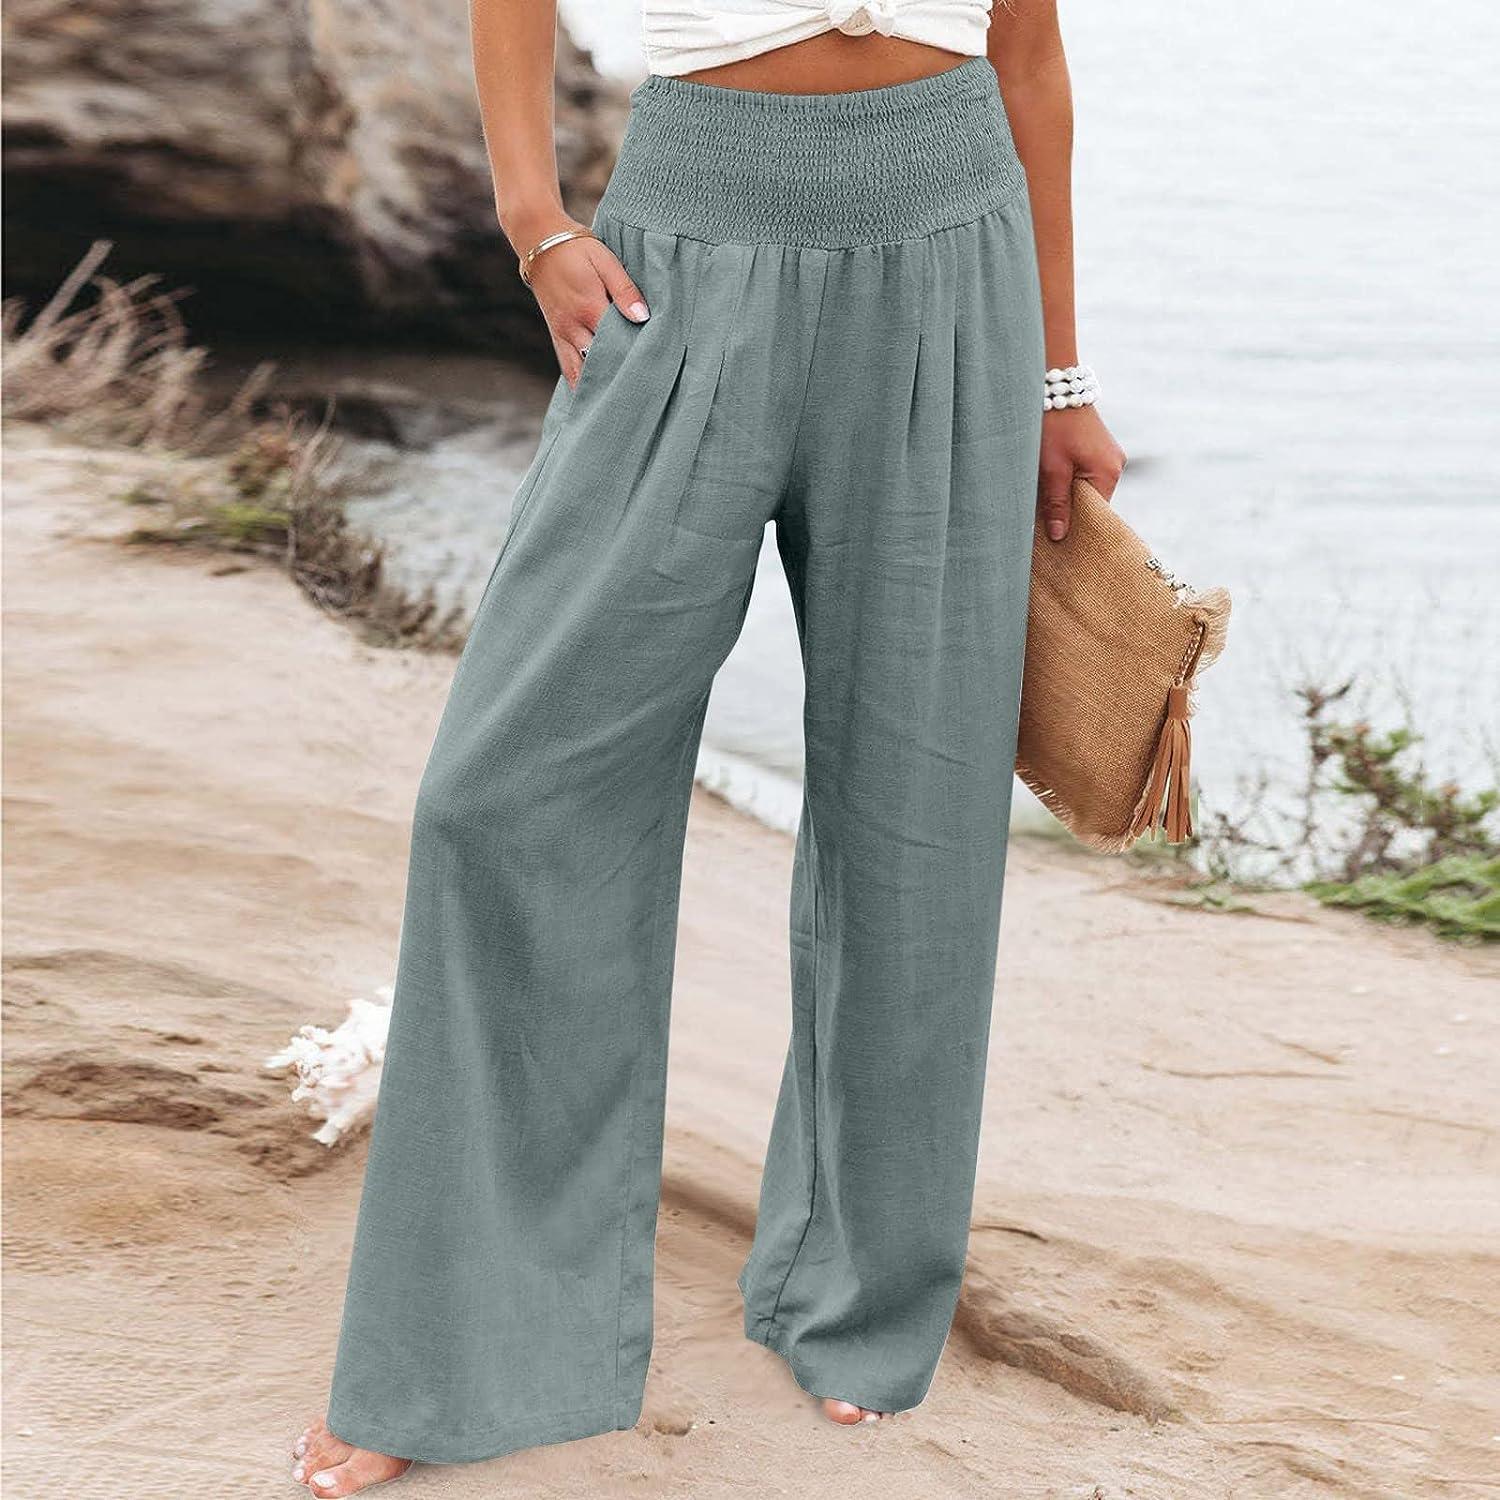 Cbcbtwo Linen Pants for Women,Summer Plus Size Elastic High